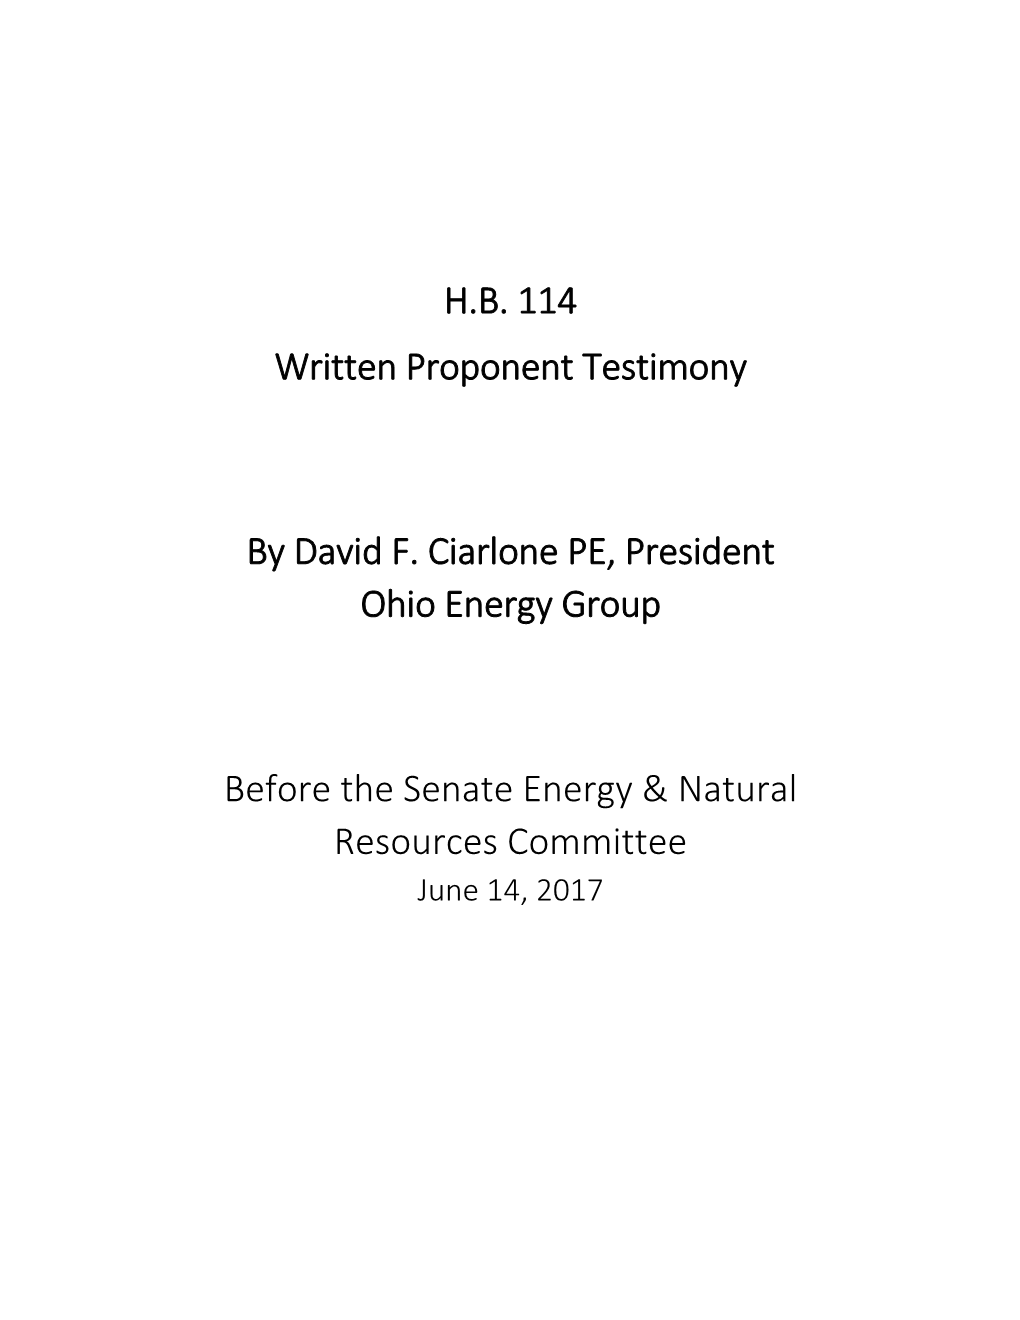 H.B. 114 Written Proponent Testimony by David F. Ciarlone PE, President